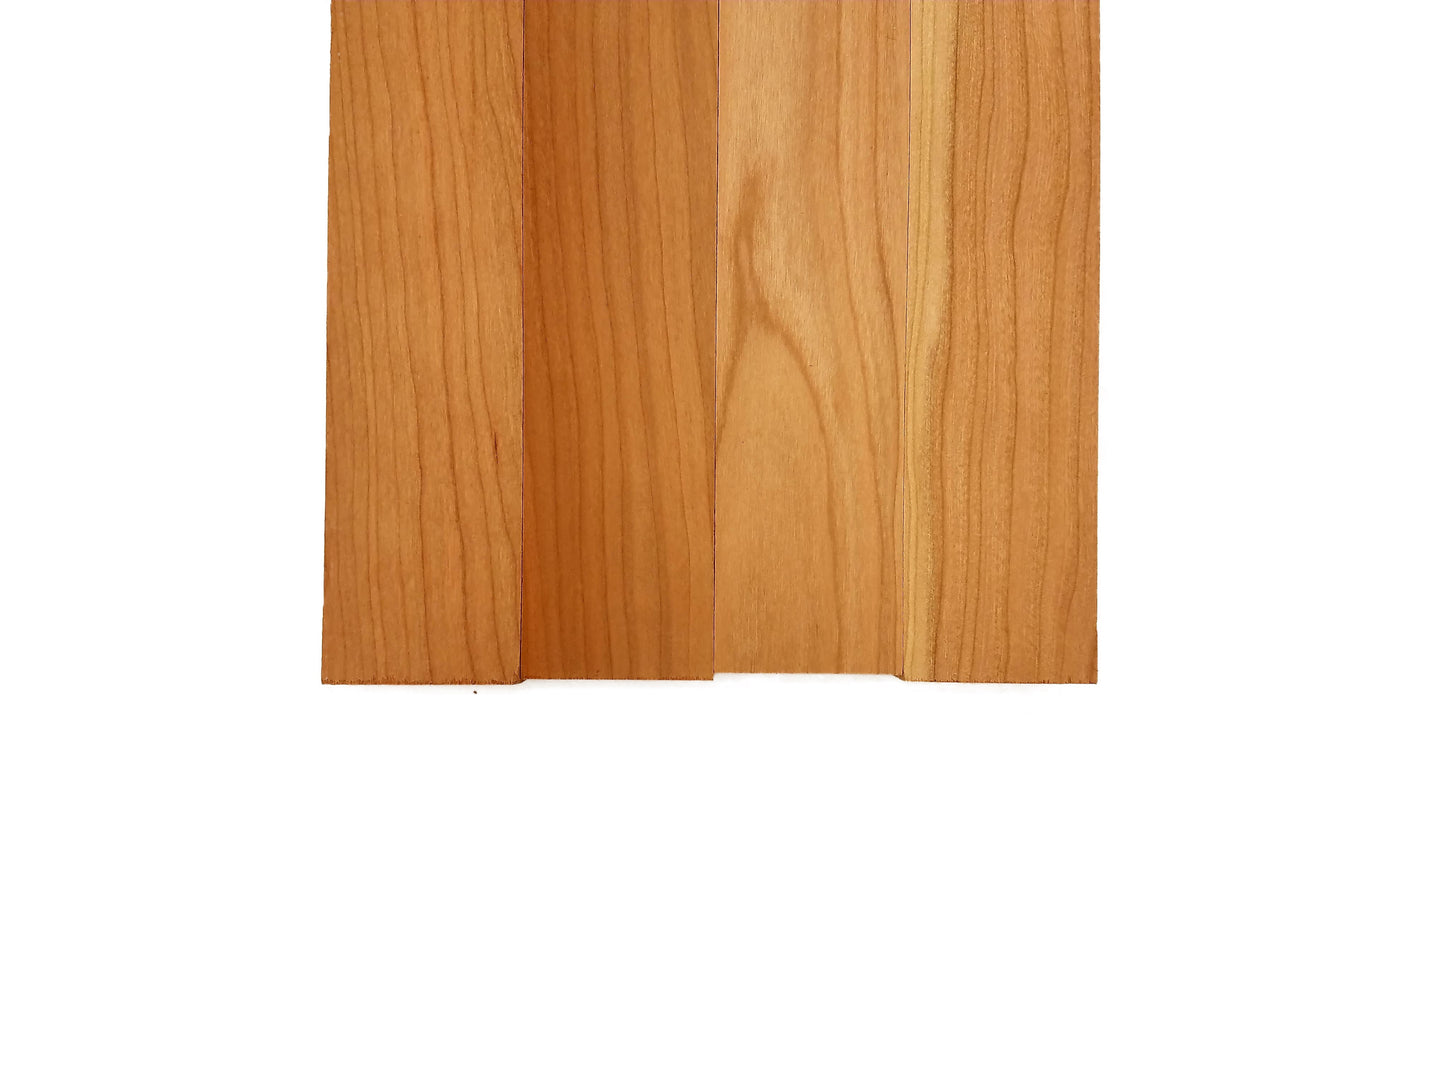 Cherry Lumber Board - 3/4" x 2" (4 Pcs)